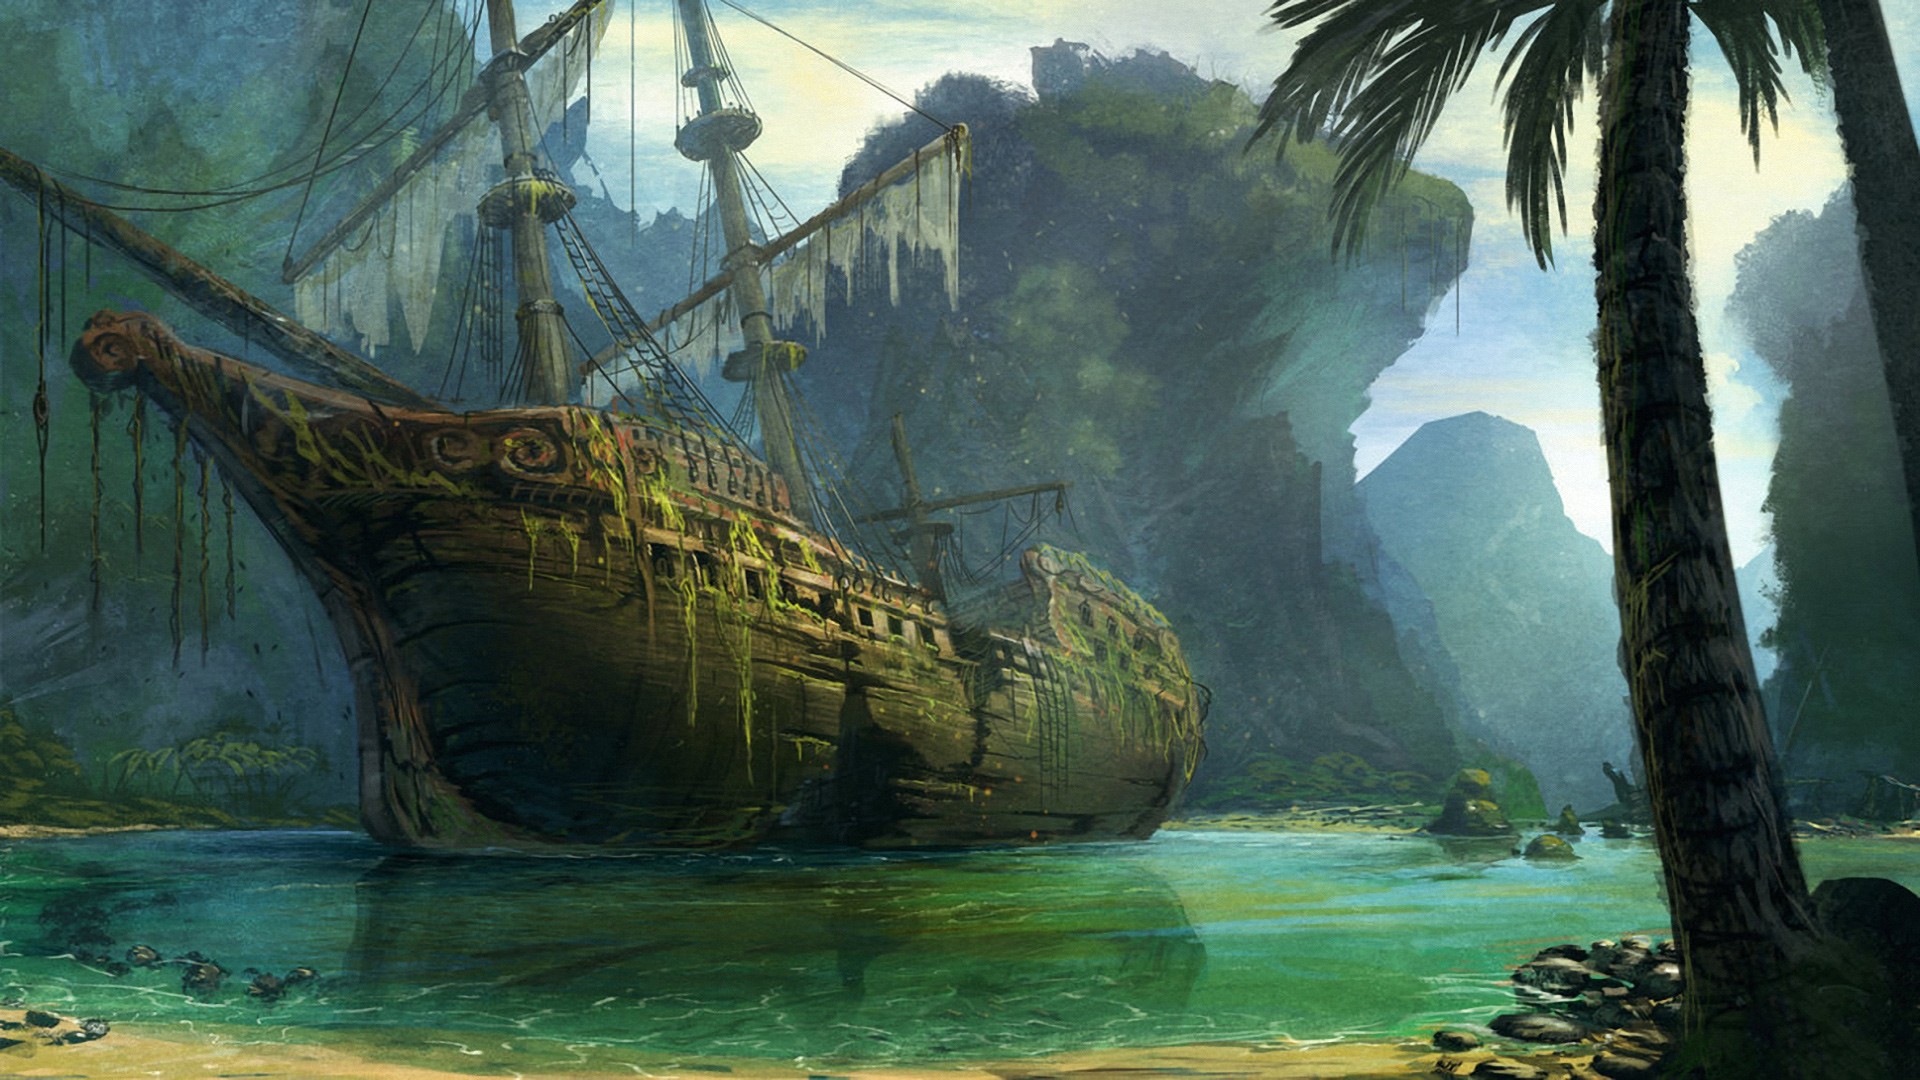 1080 pixel wallpaper,nature,painting,jungle,landscape,adventure game